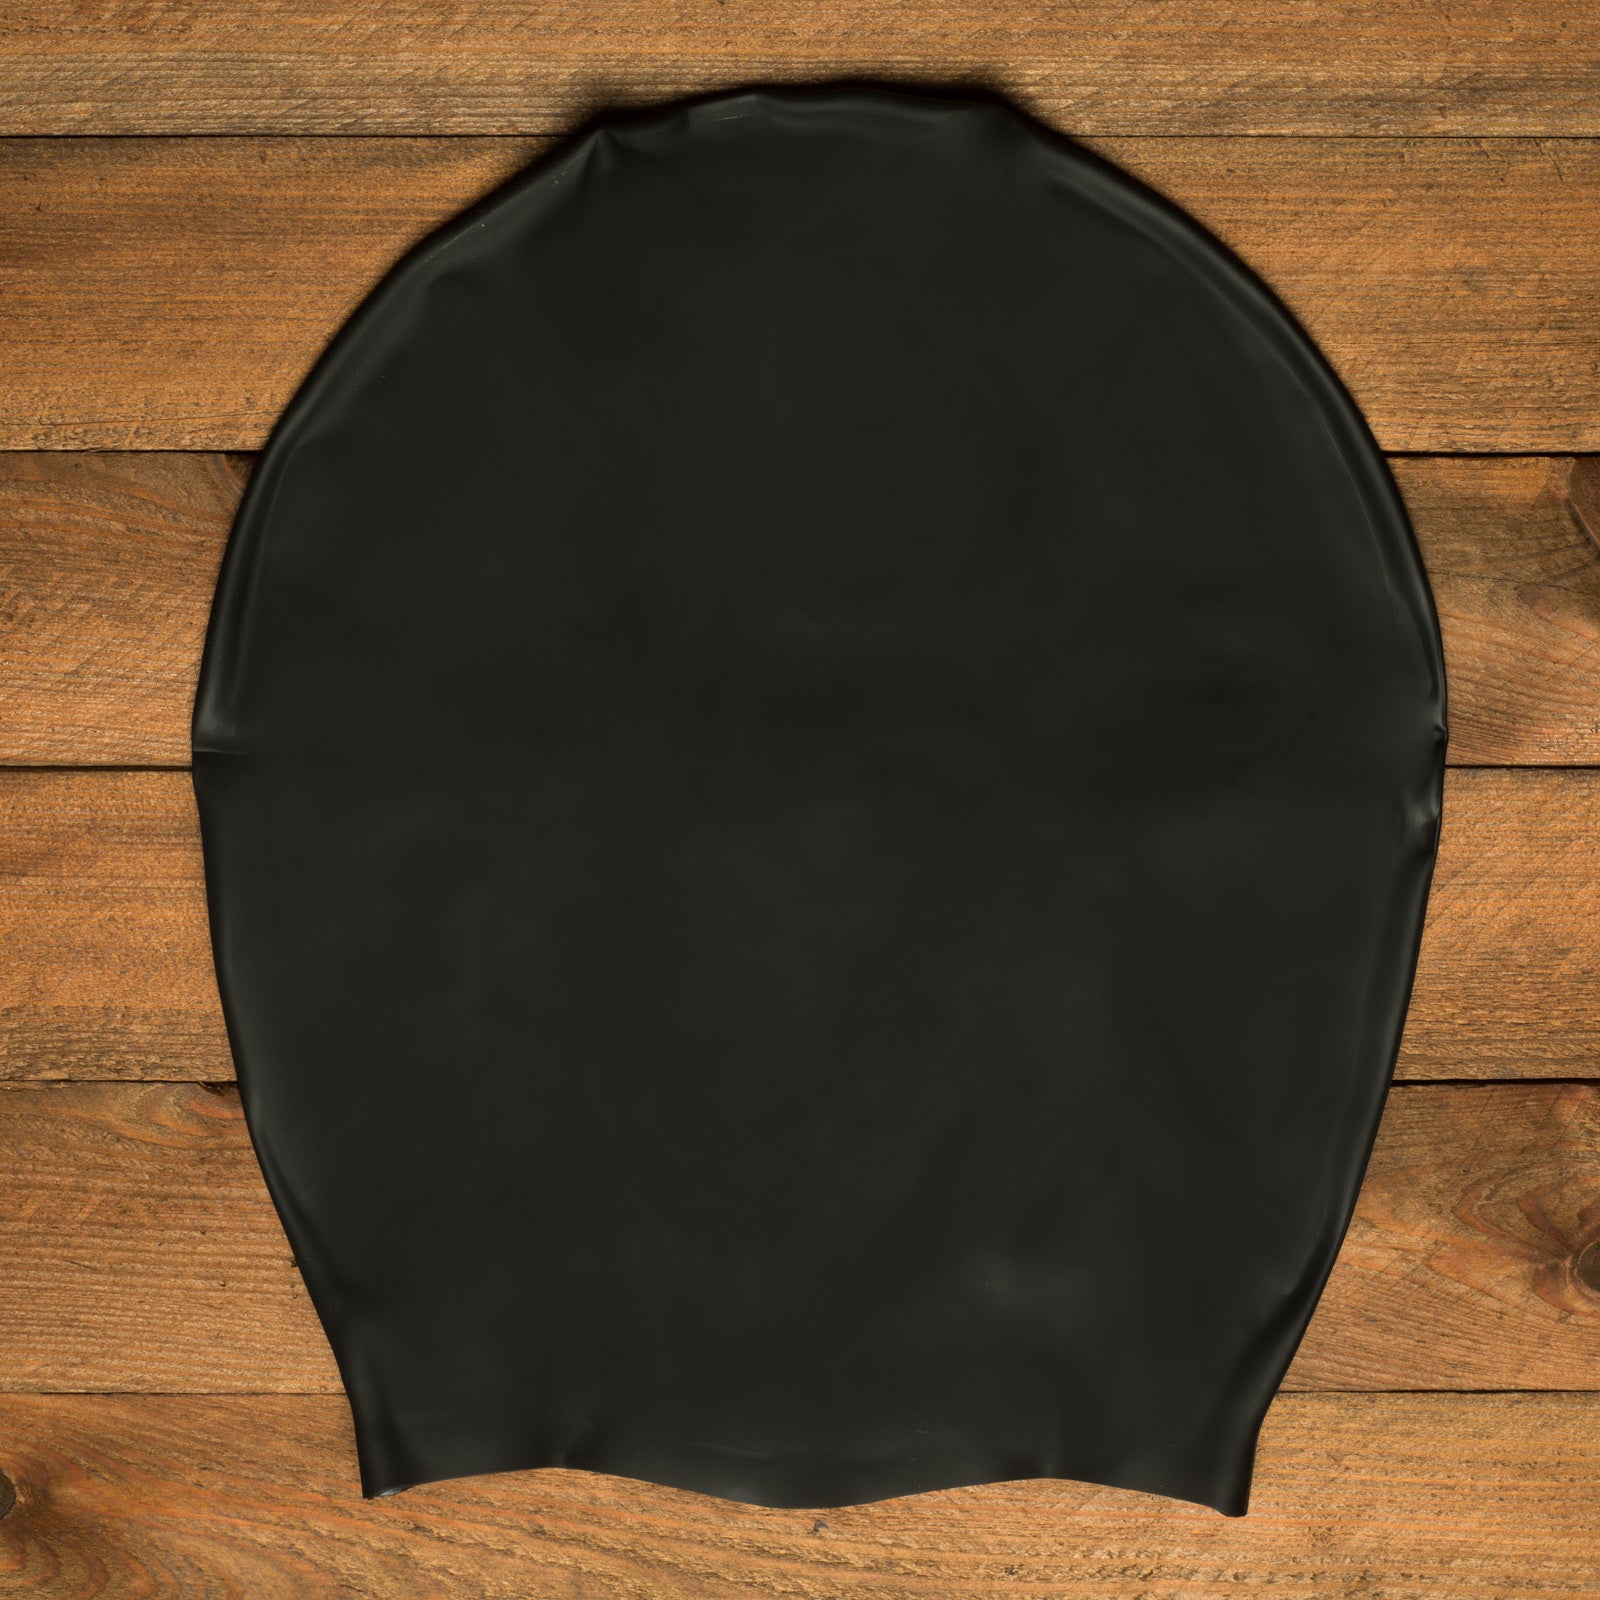 DreadLab - Dreadlocks Large Swim Cap (Multiple Colours and Sizes)